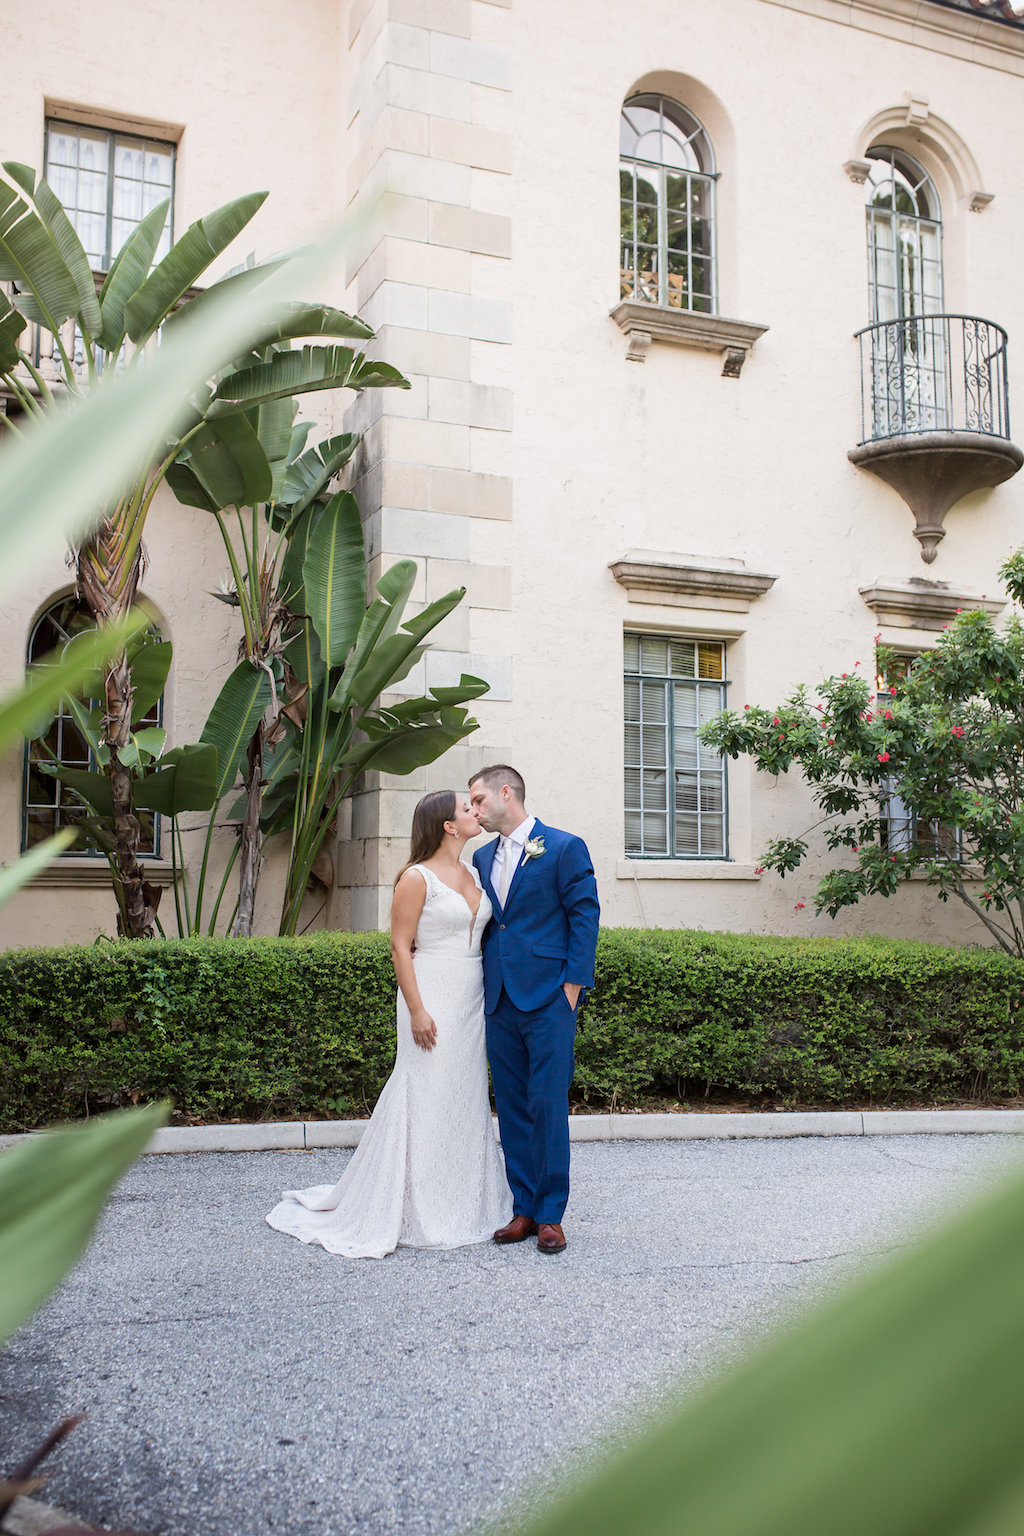 Outdoor Bride and Groom First Look Wedding Portrait | Tampa Bay Photographer Cat Pennenga Photography | Sarasota Venue Powel Crosley Estate